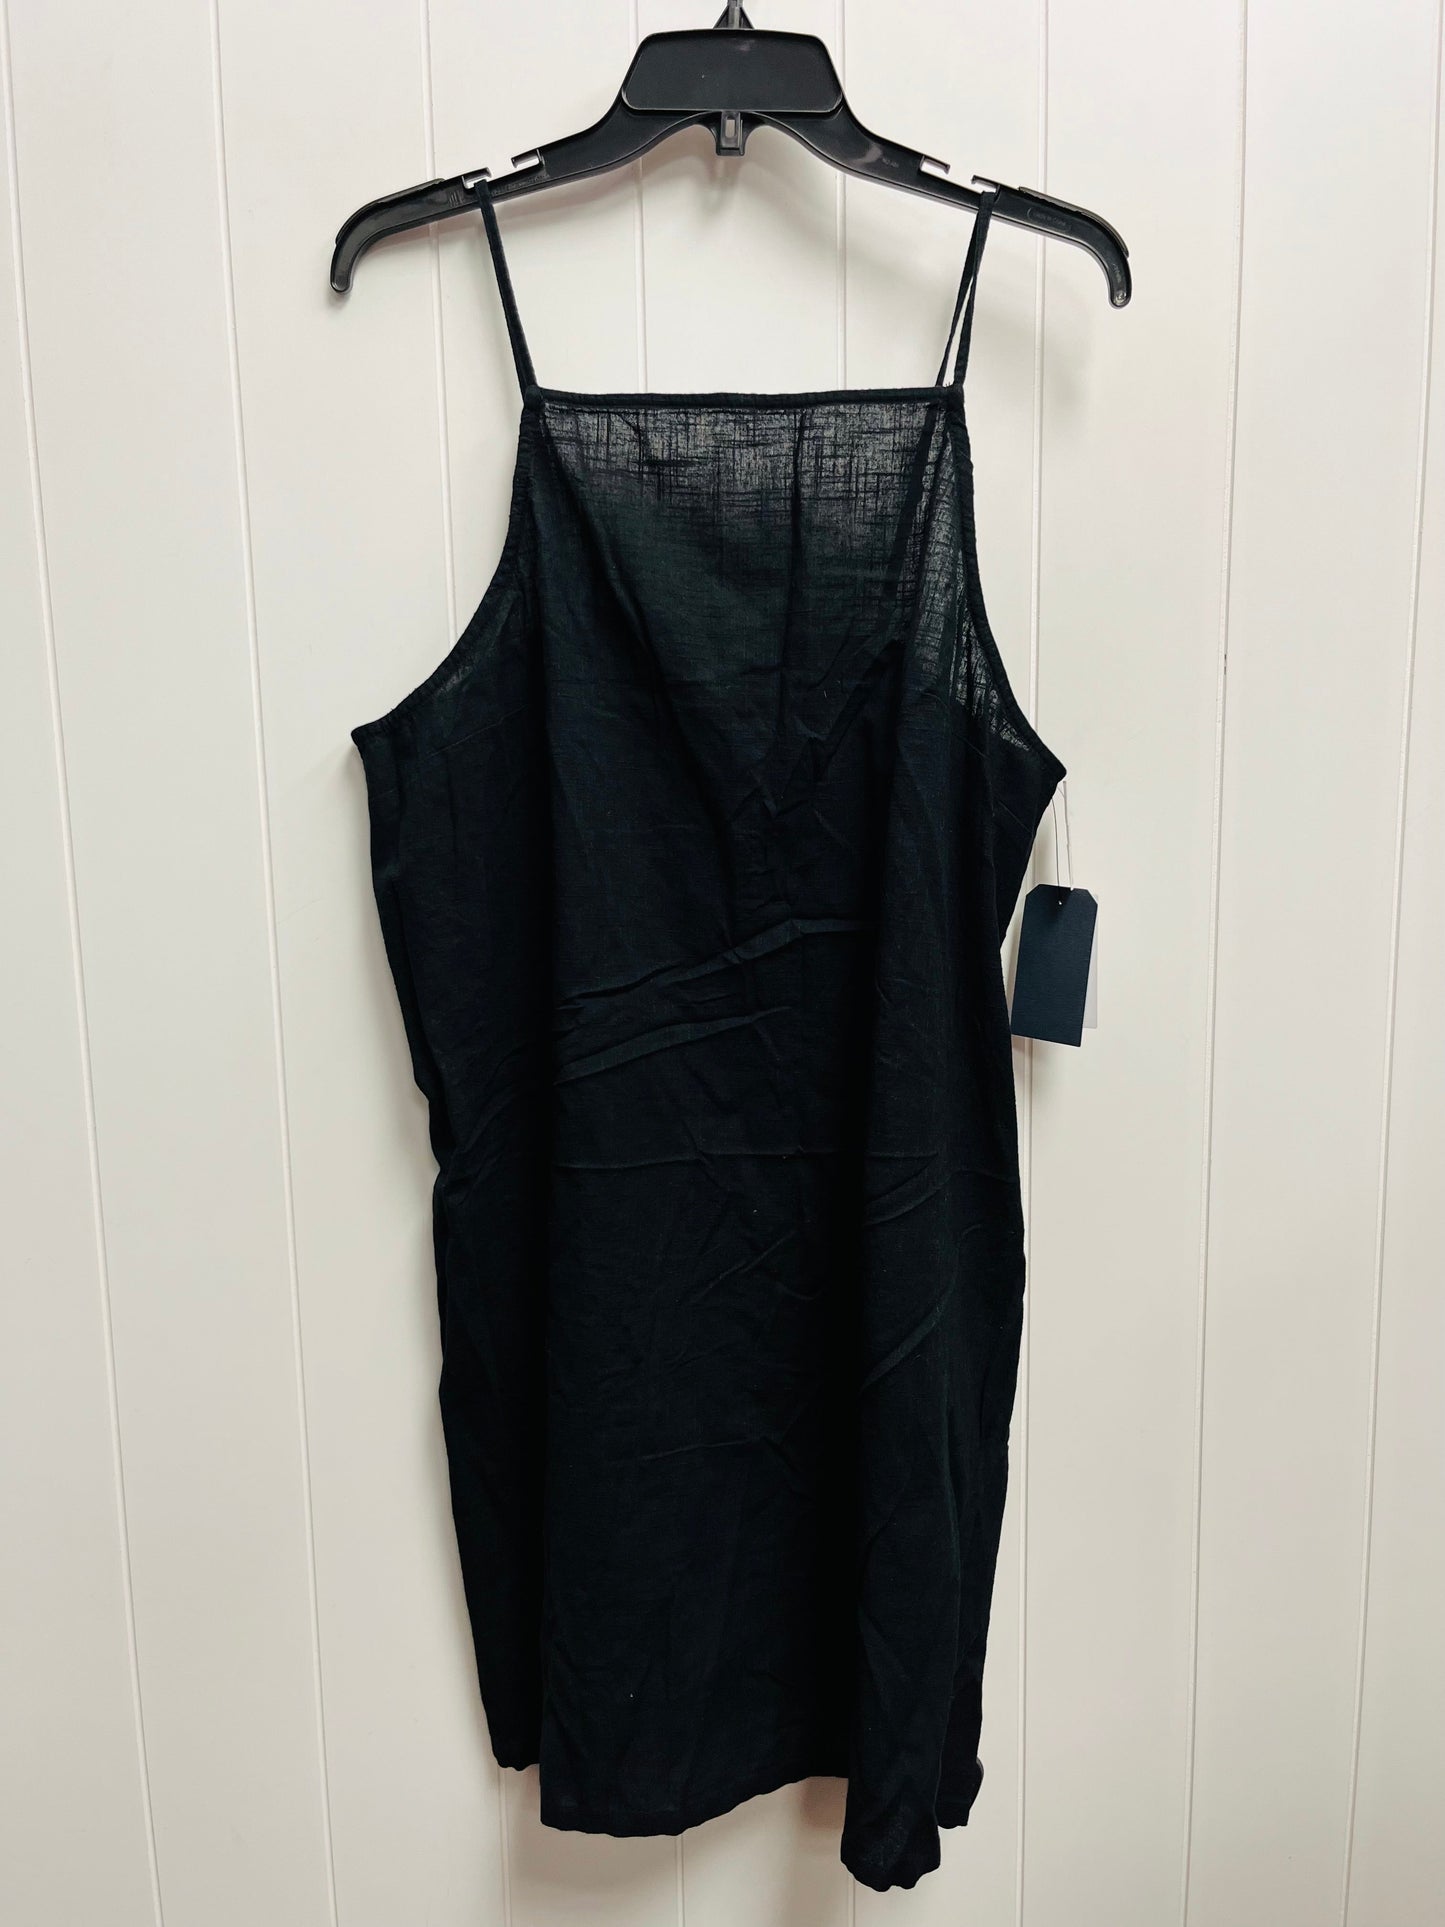 Black Dress Casual Short Melrose And Market, Size Xl